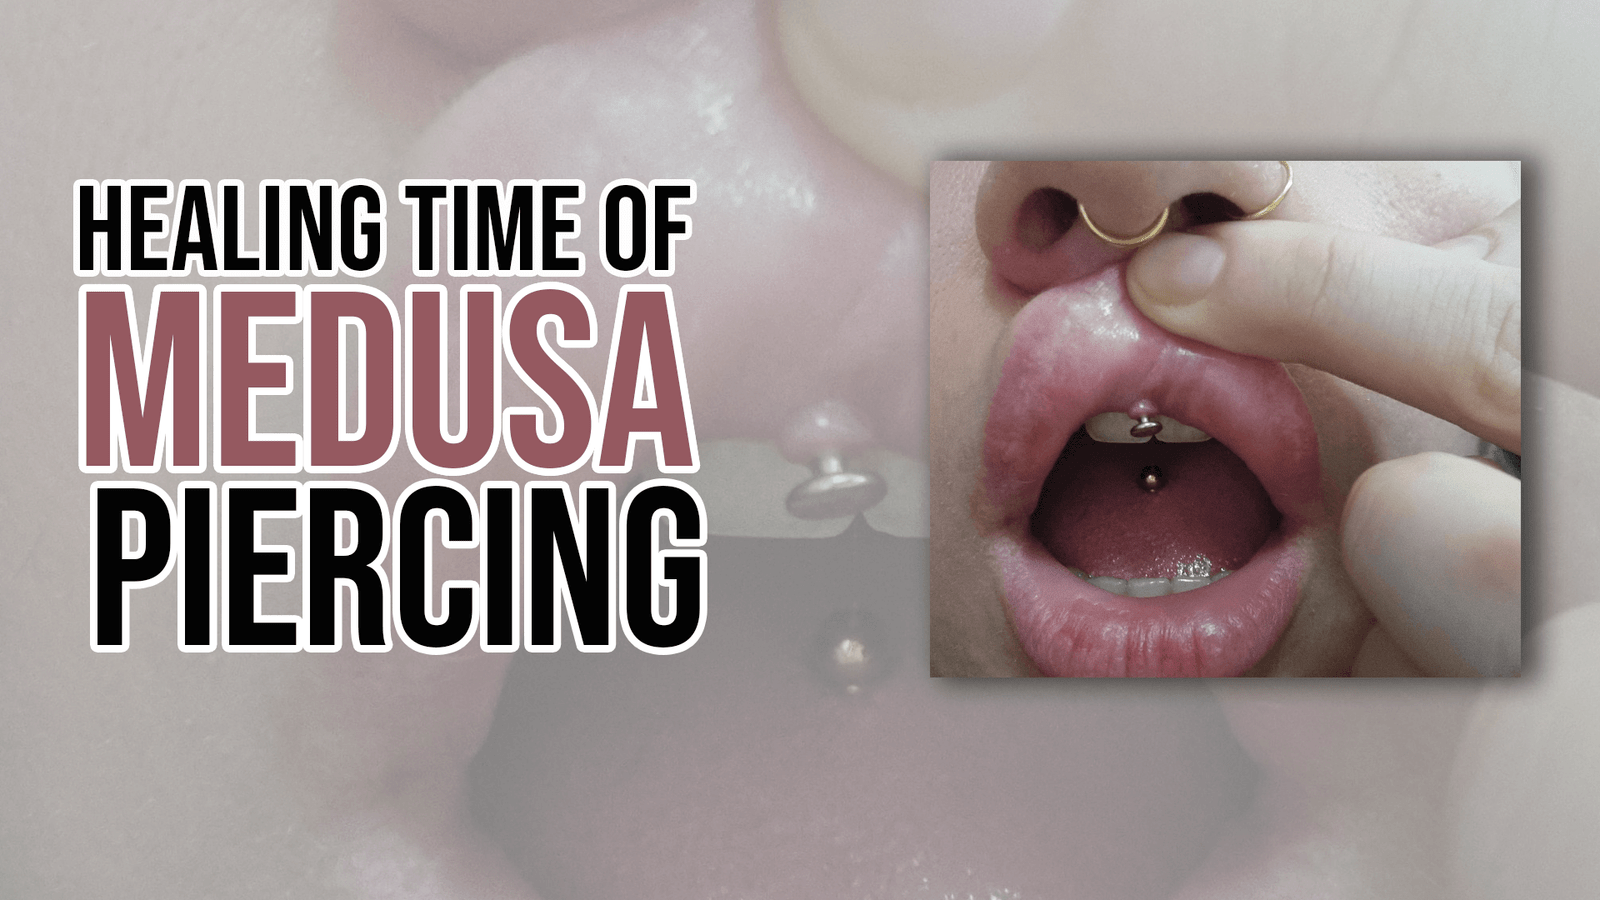 Healing Time of Medusa Piercing